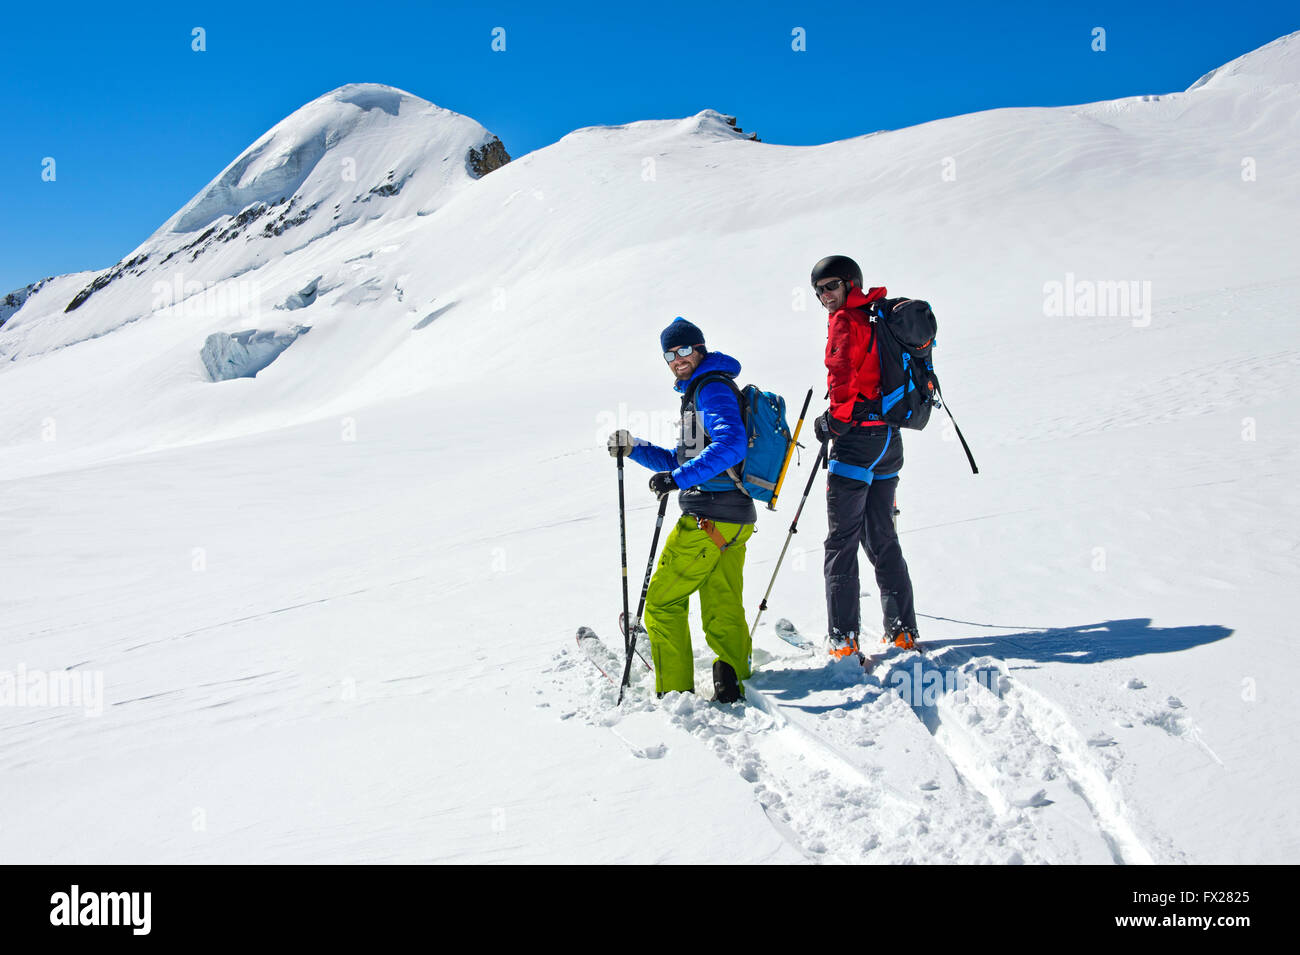 Two skiers on a ski tour on the Aebeni Flue firn fiel beneath the Mittagshorn peak, Loetschental, Valais, Switzerland Stock Photo